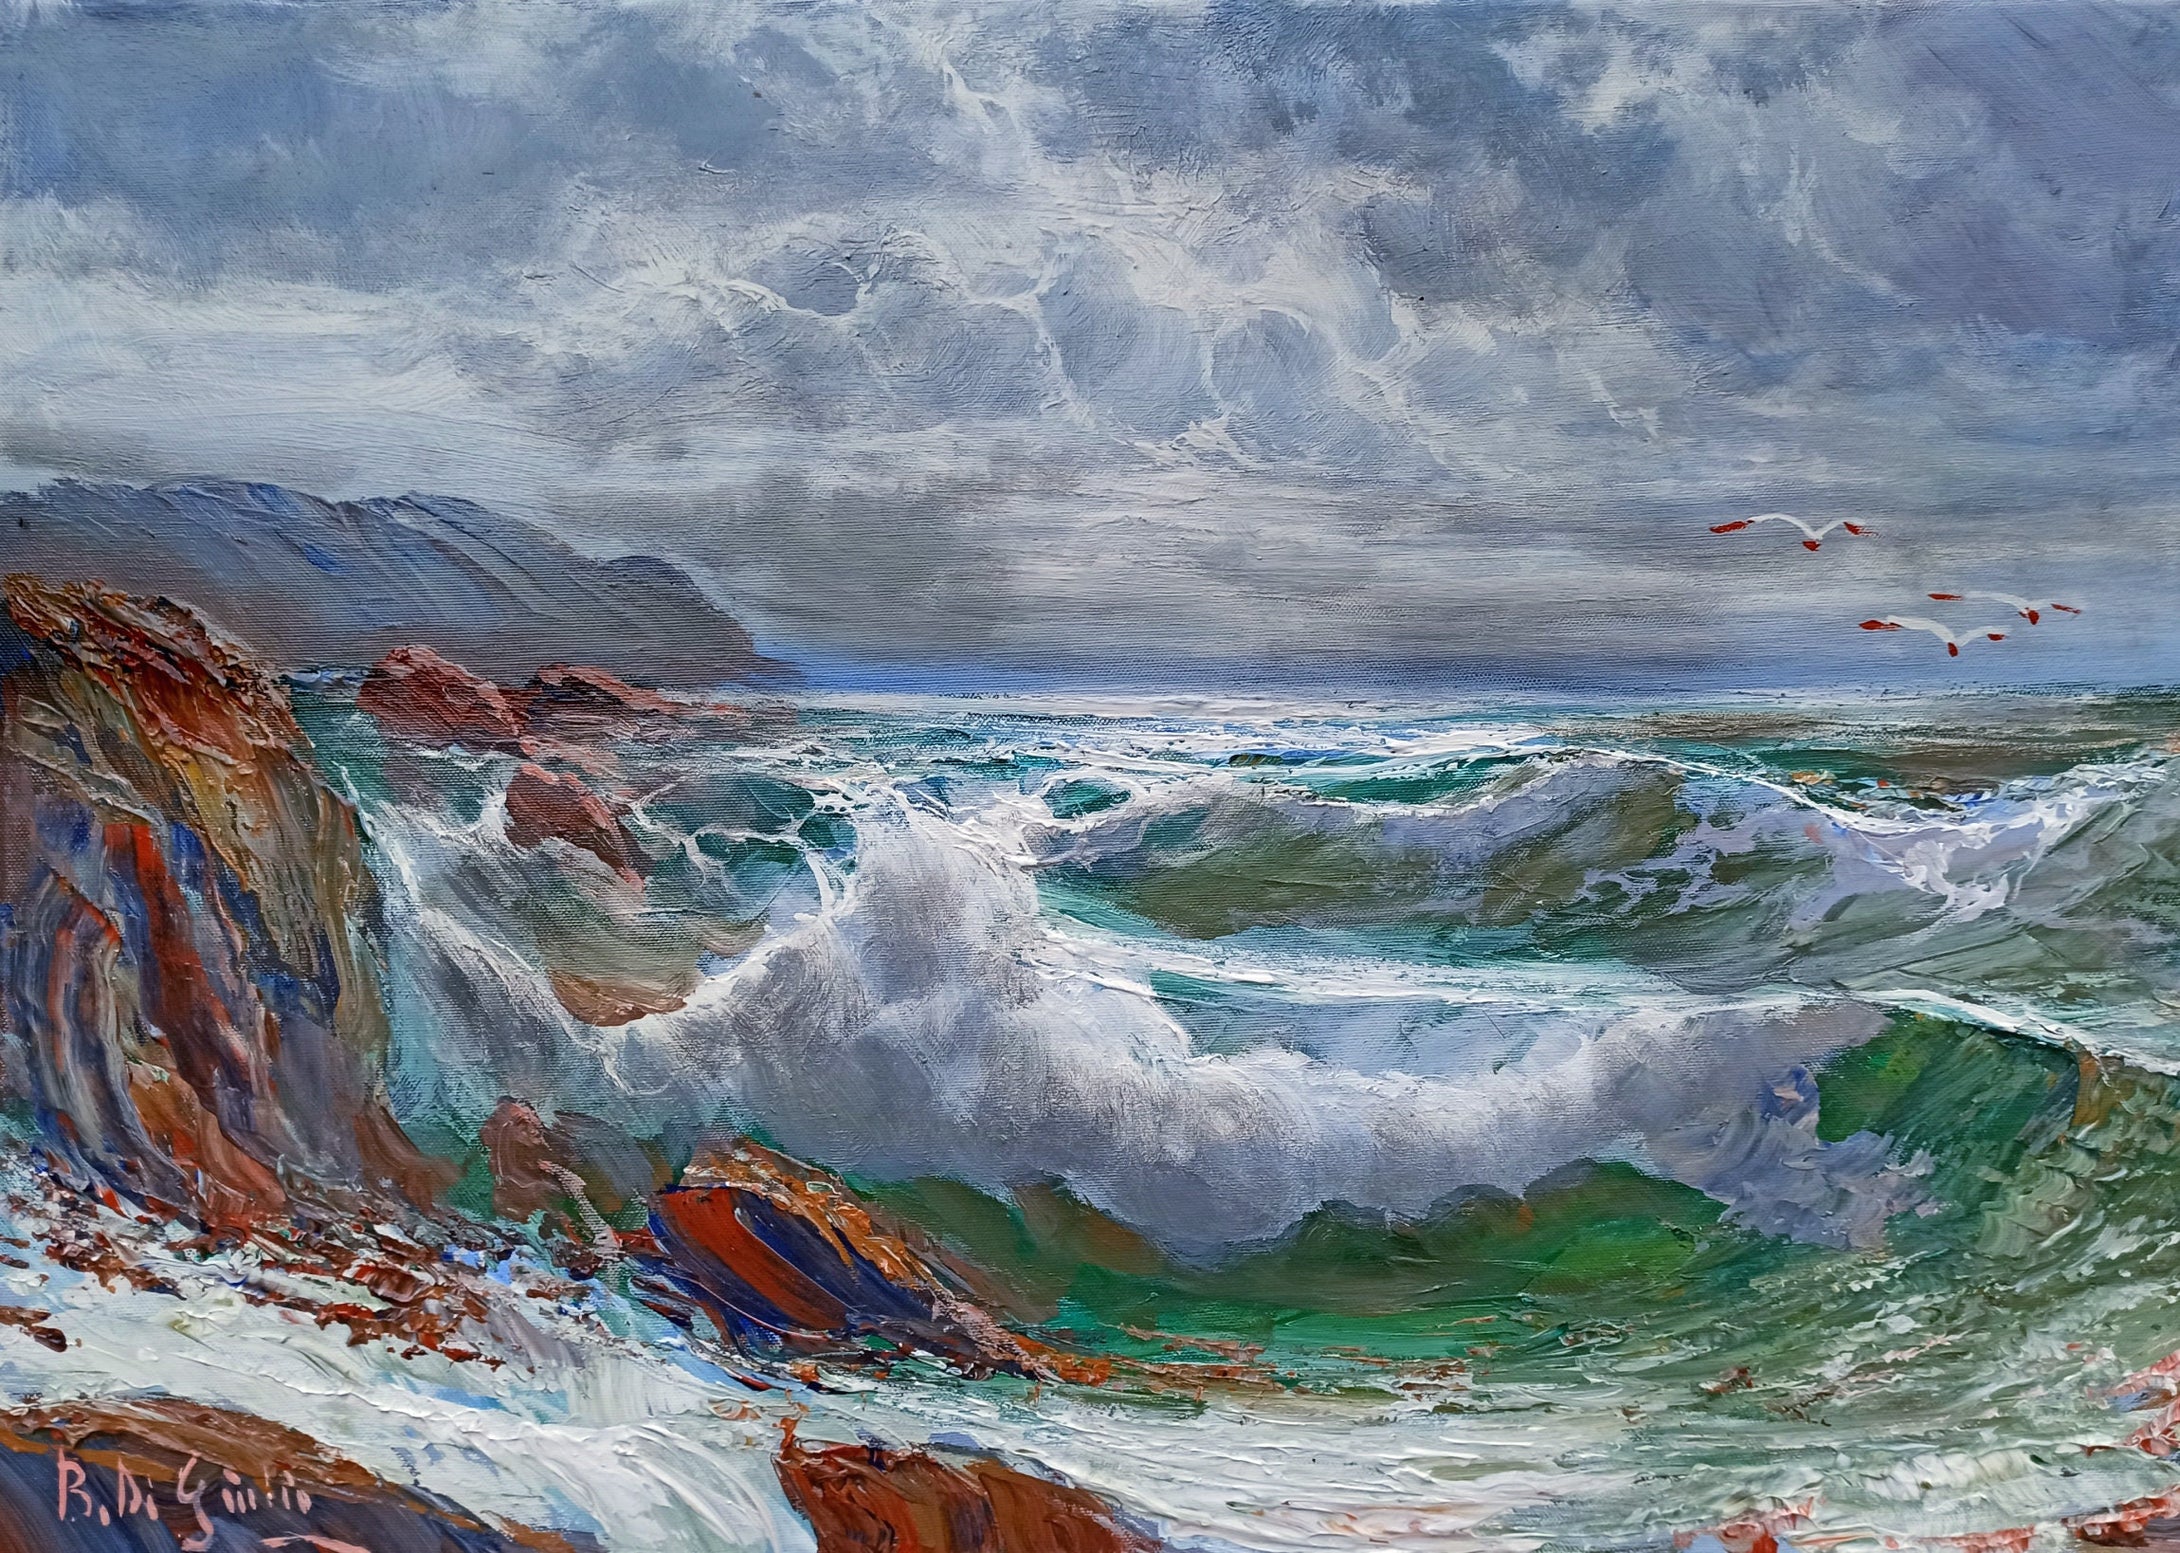 Sea swell painting n*1 series 